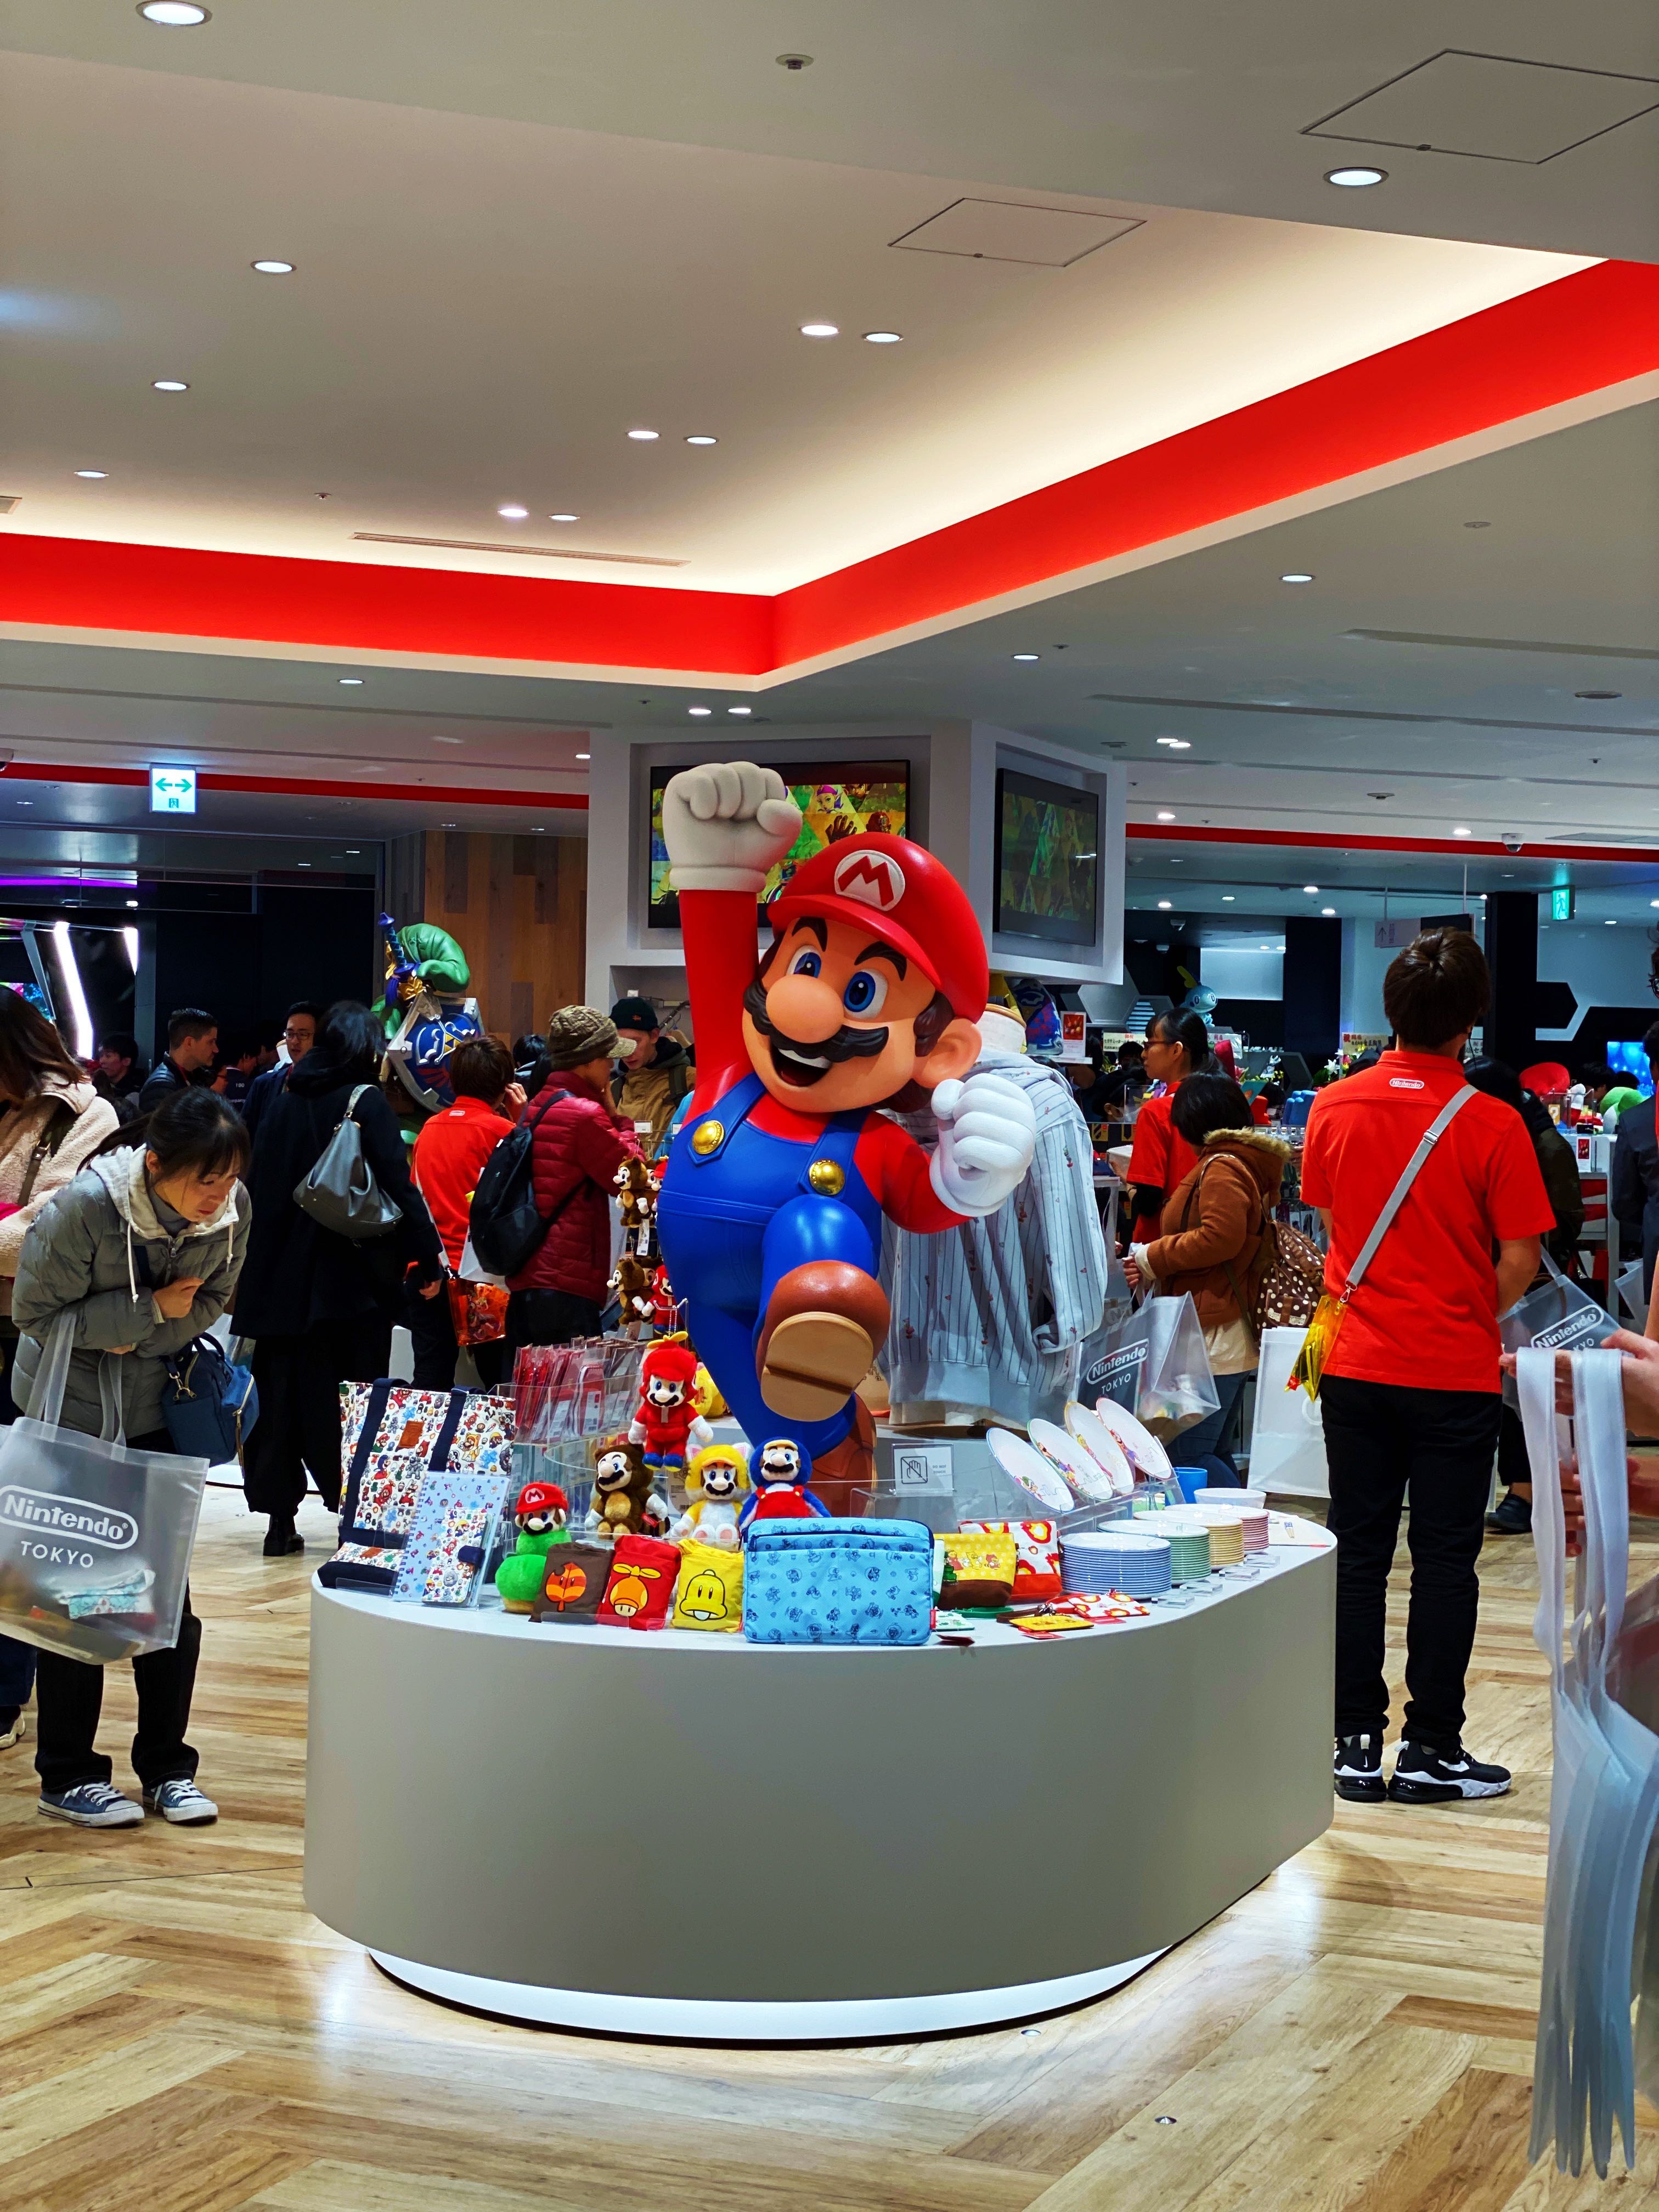 Tokyo's dedicated Nintendo store finally begins offering its exclusive  items online